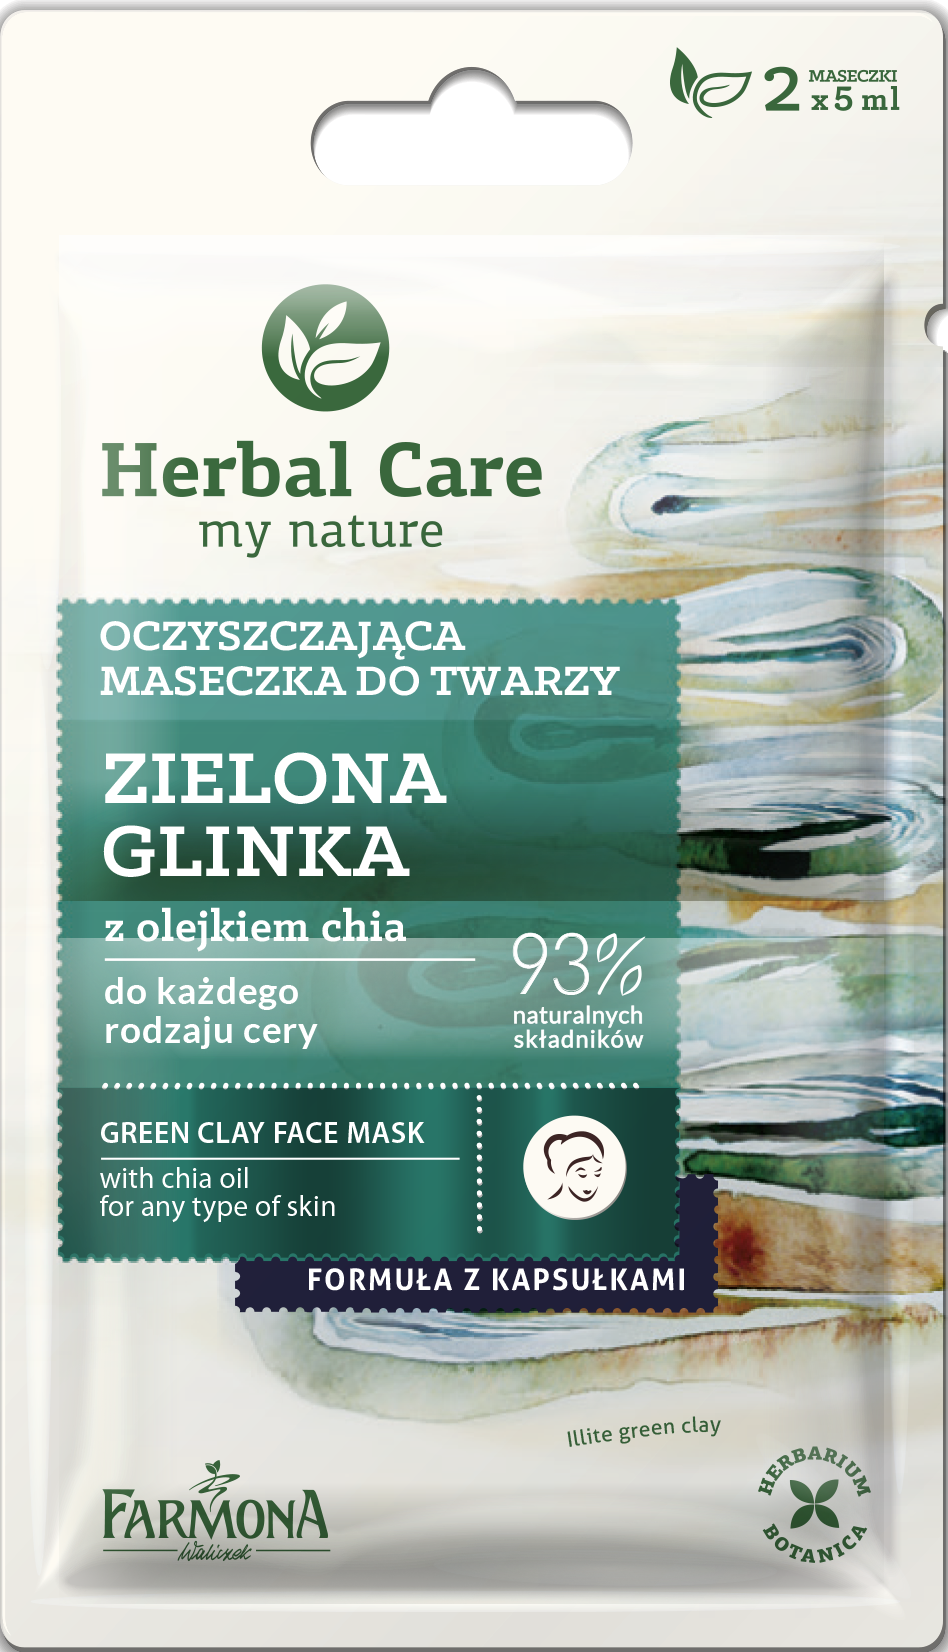 Farmona_Herbal_Care_double_maseczki_GLINKA